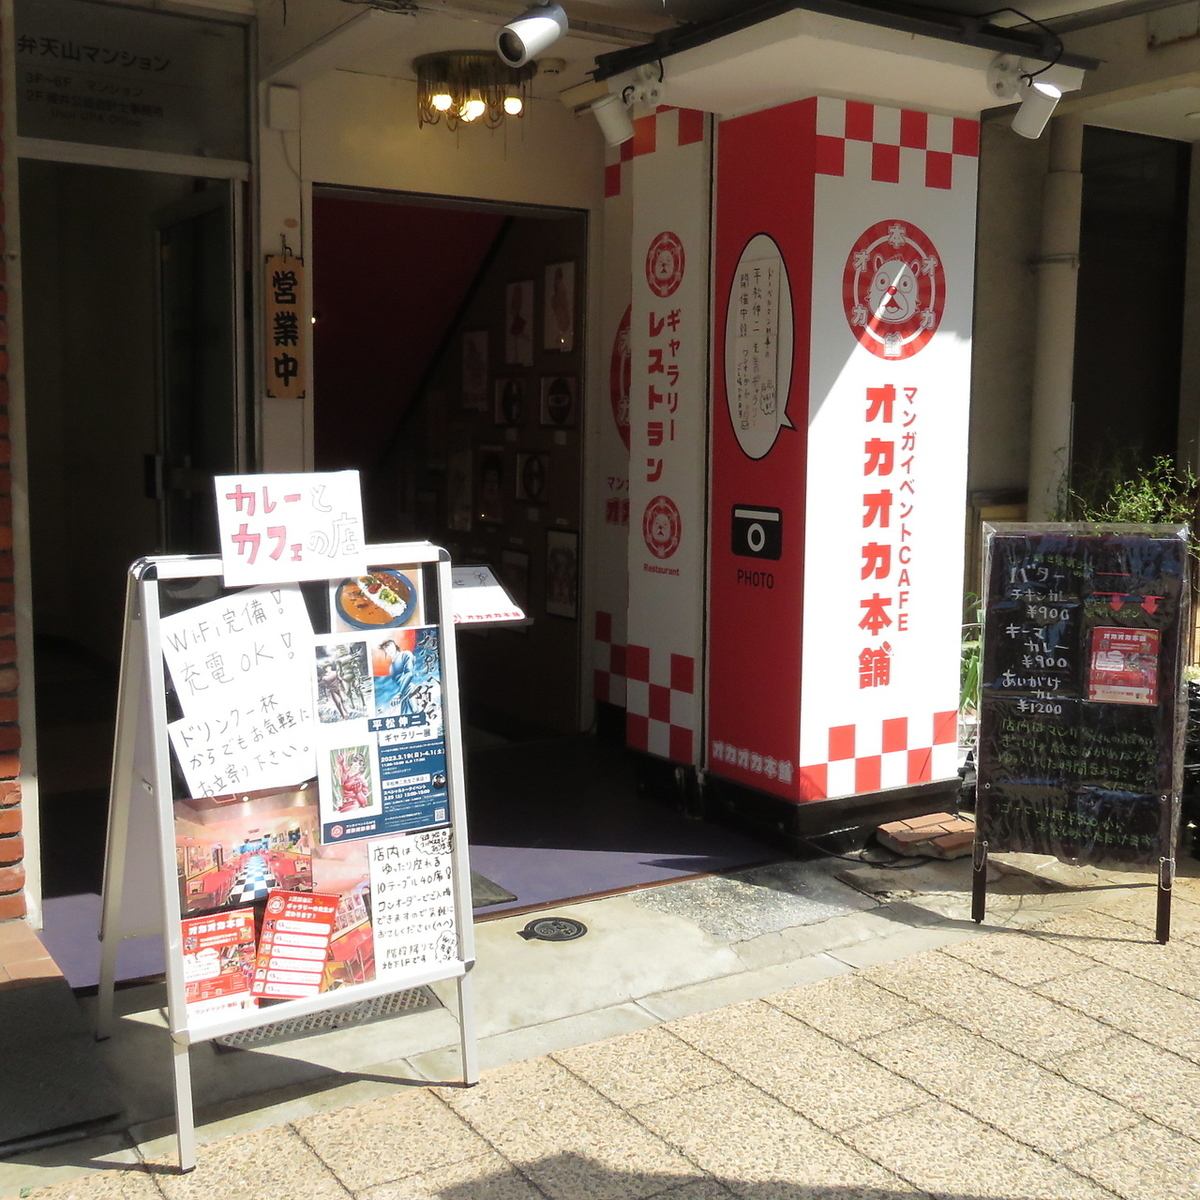 Reopened in Asakusa! Groups can enjoy manga illustrations